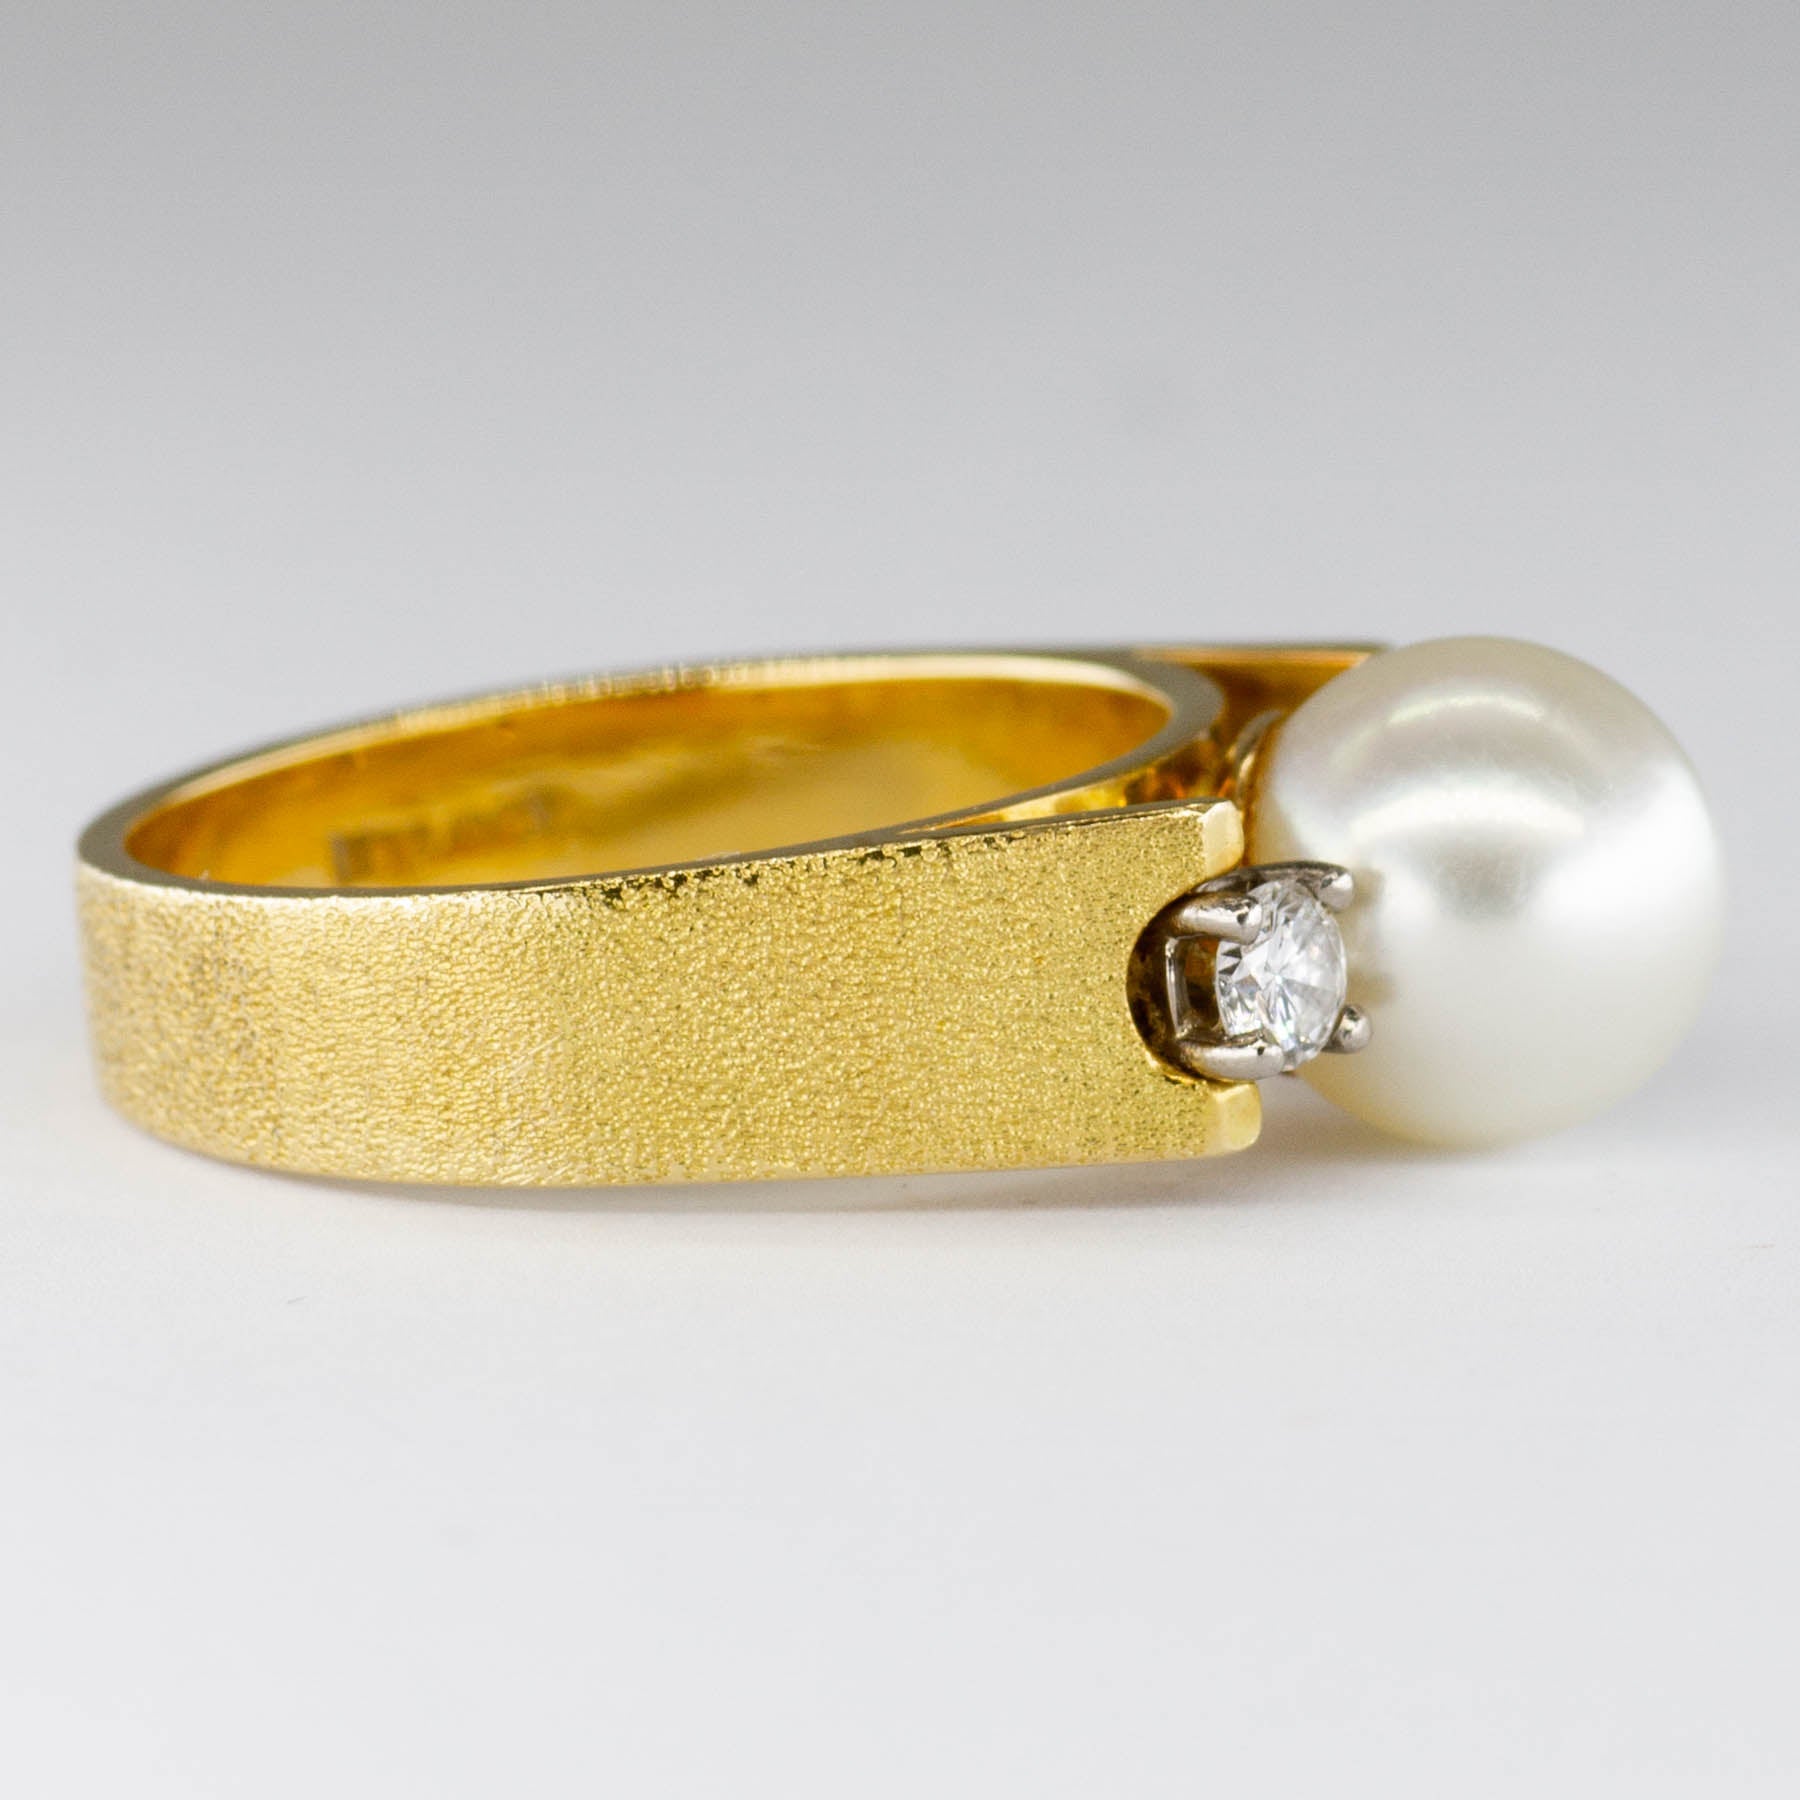 'Cavelti' Pearl and Diamond Ring | 0.20ctw | SZ 6.75 - 100 Ways